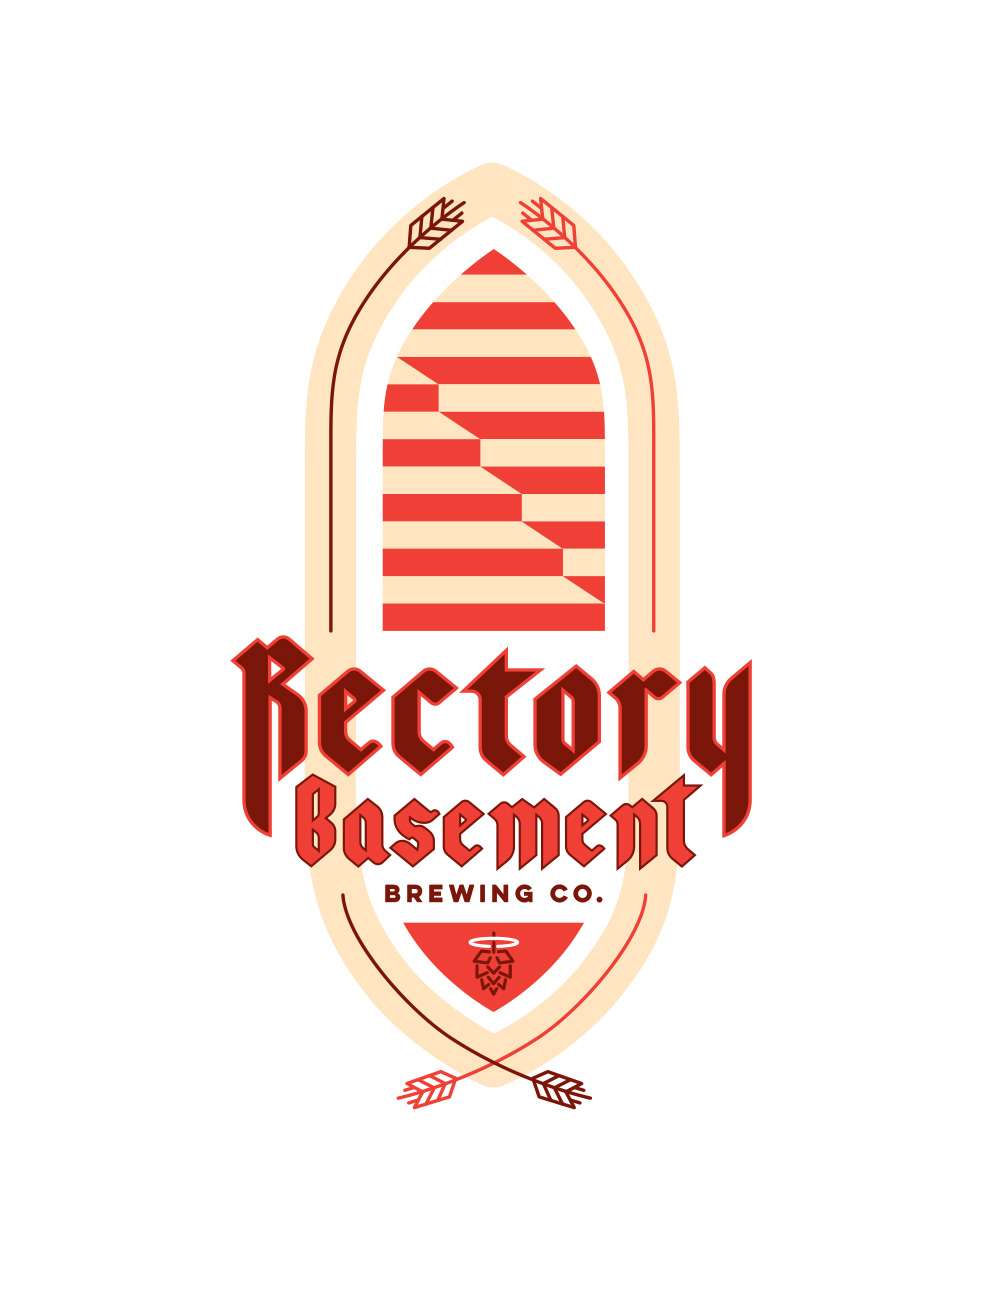 Rectory Basement Brewing Logo